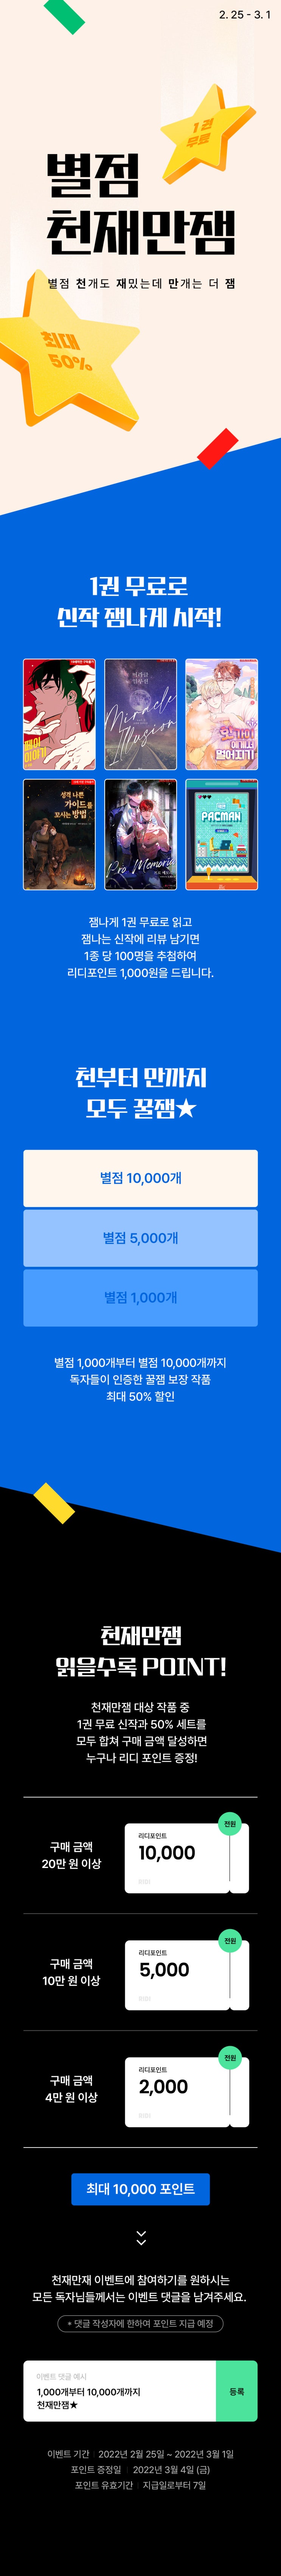 BL소설 추천) 리디북스 22.02월 재정가(별점 천재만점) 추천 및 구매